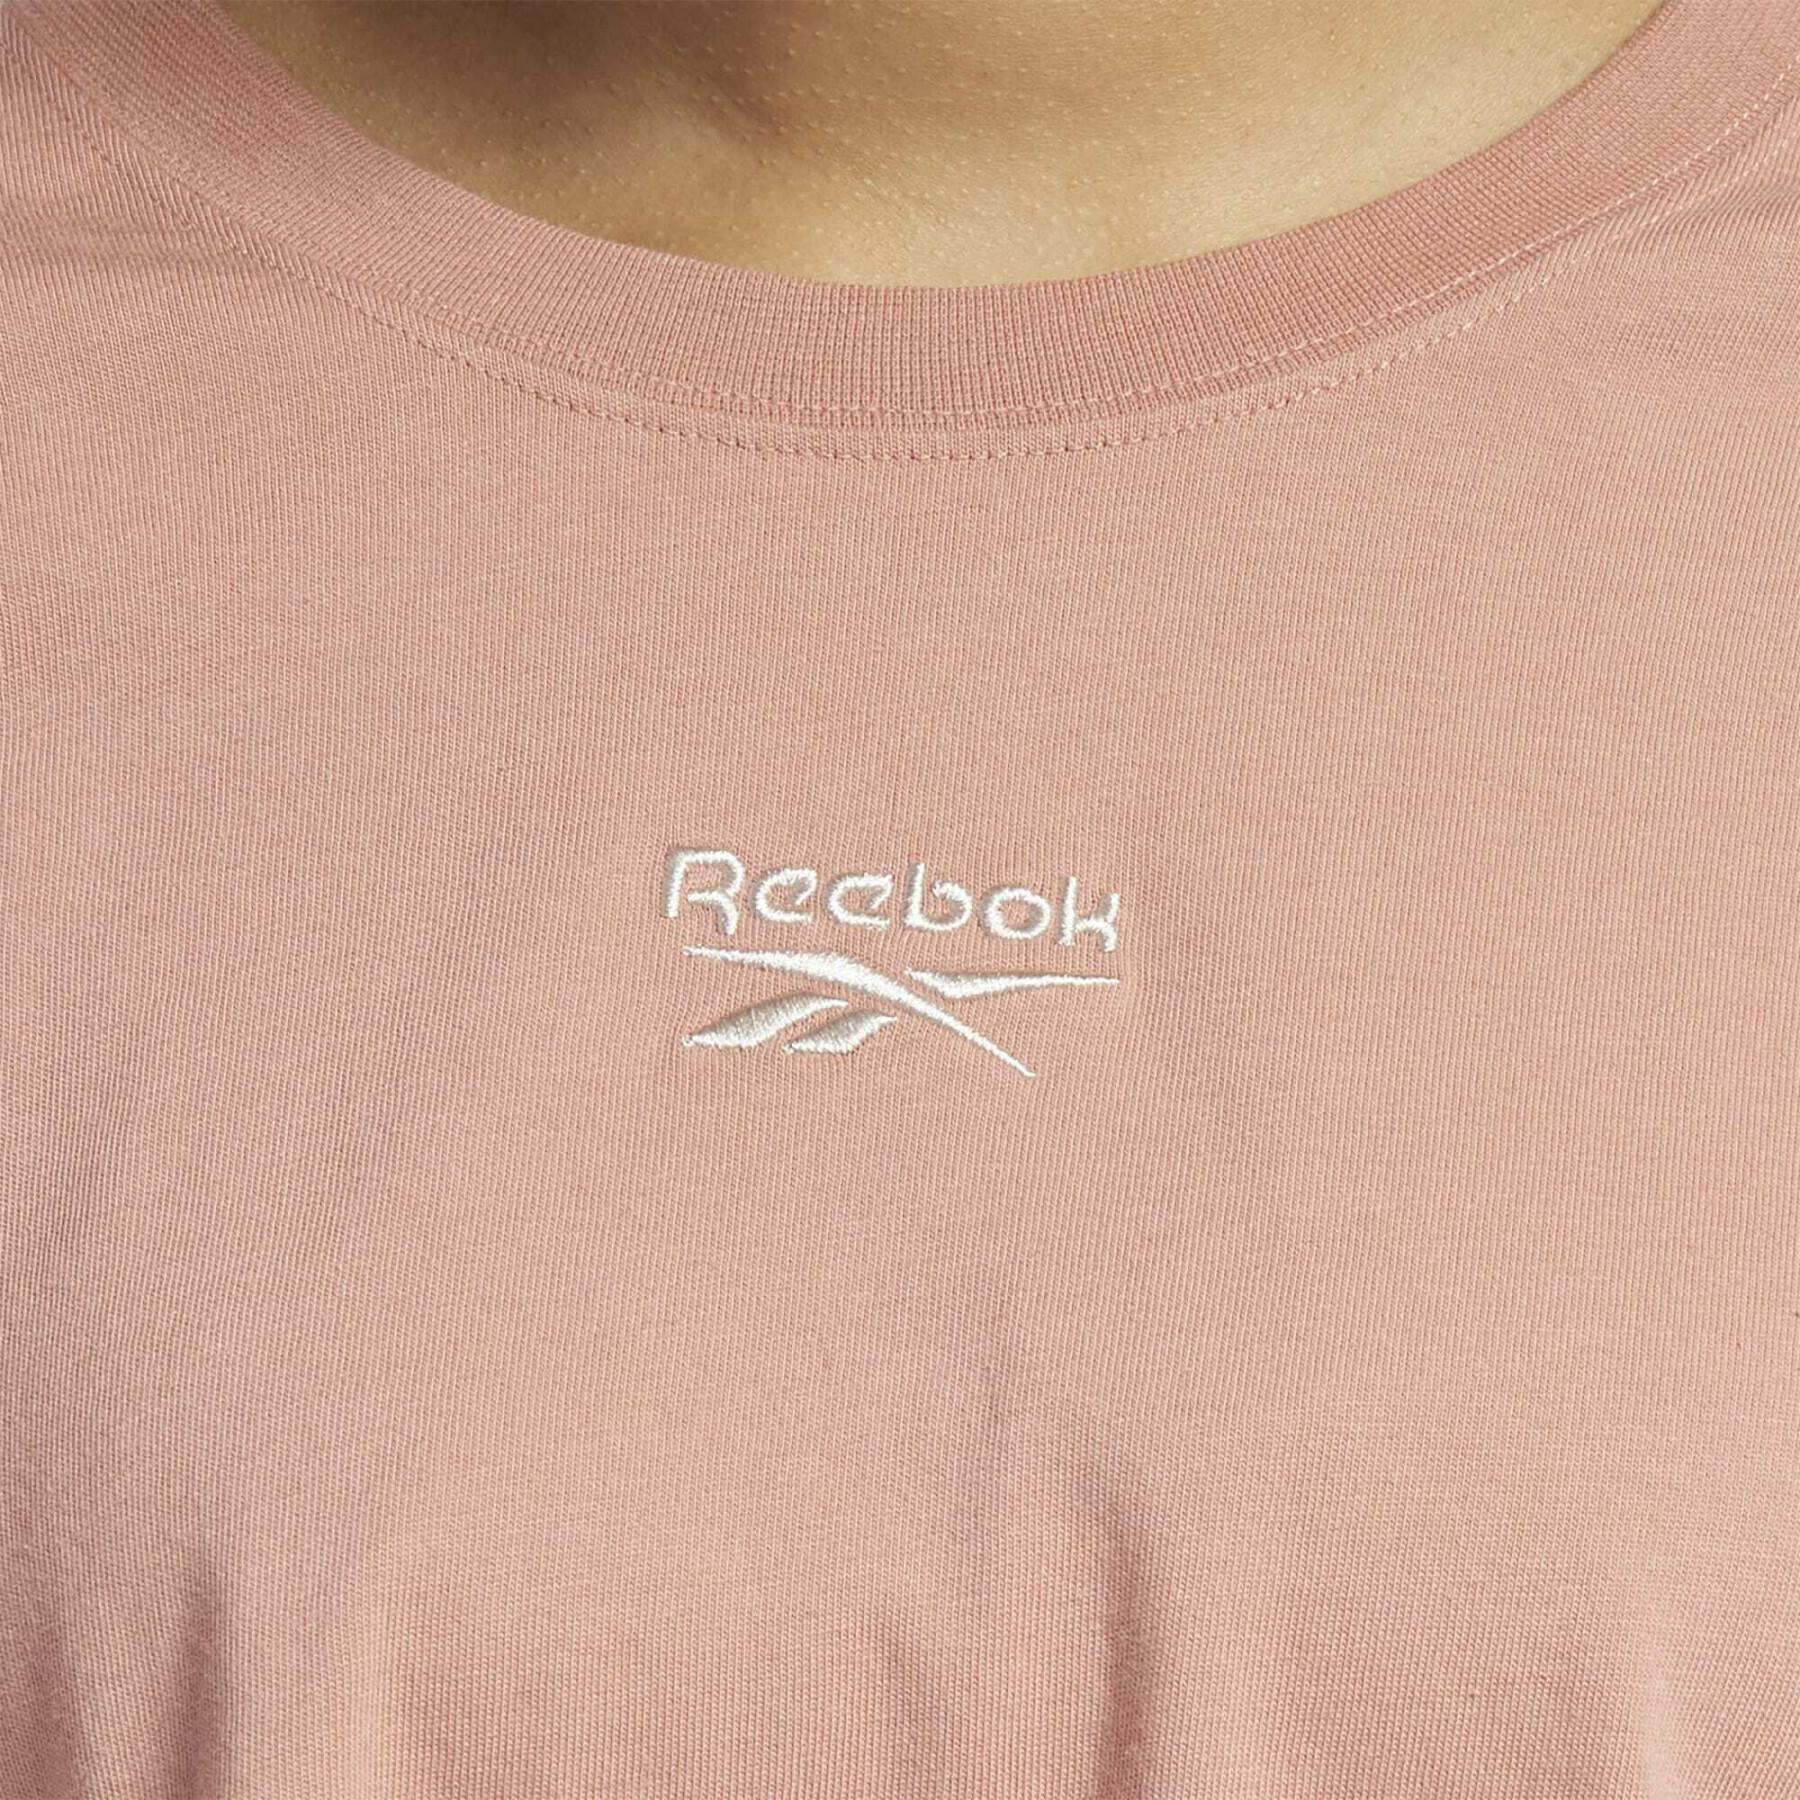 Camiseta feminina Reebok